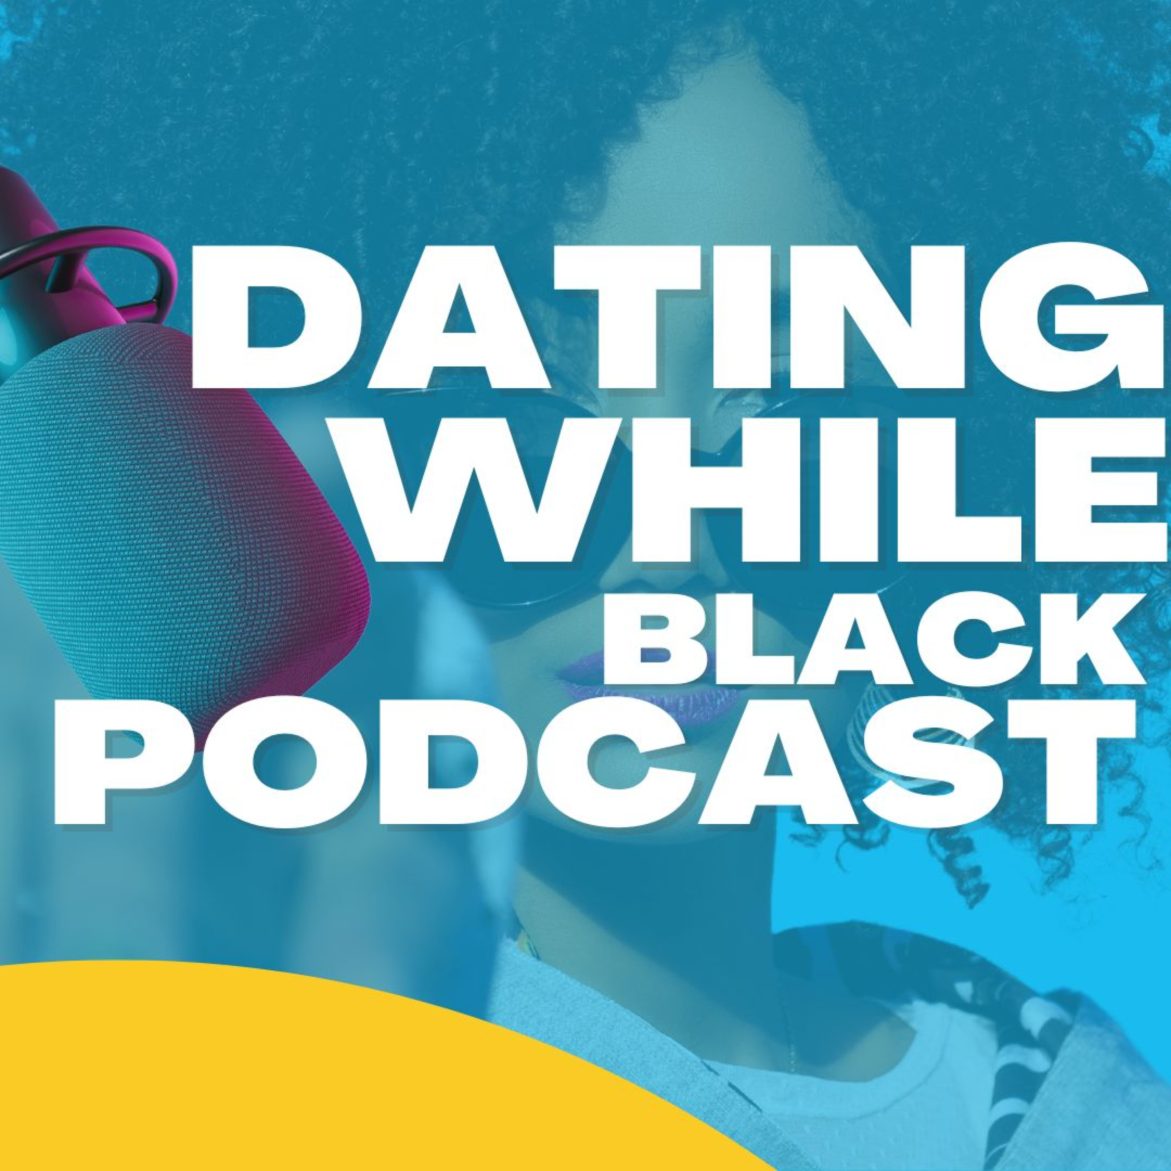 Black Podcasting - Don’t Look Back